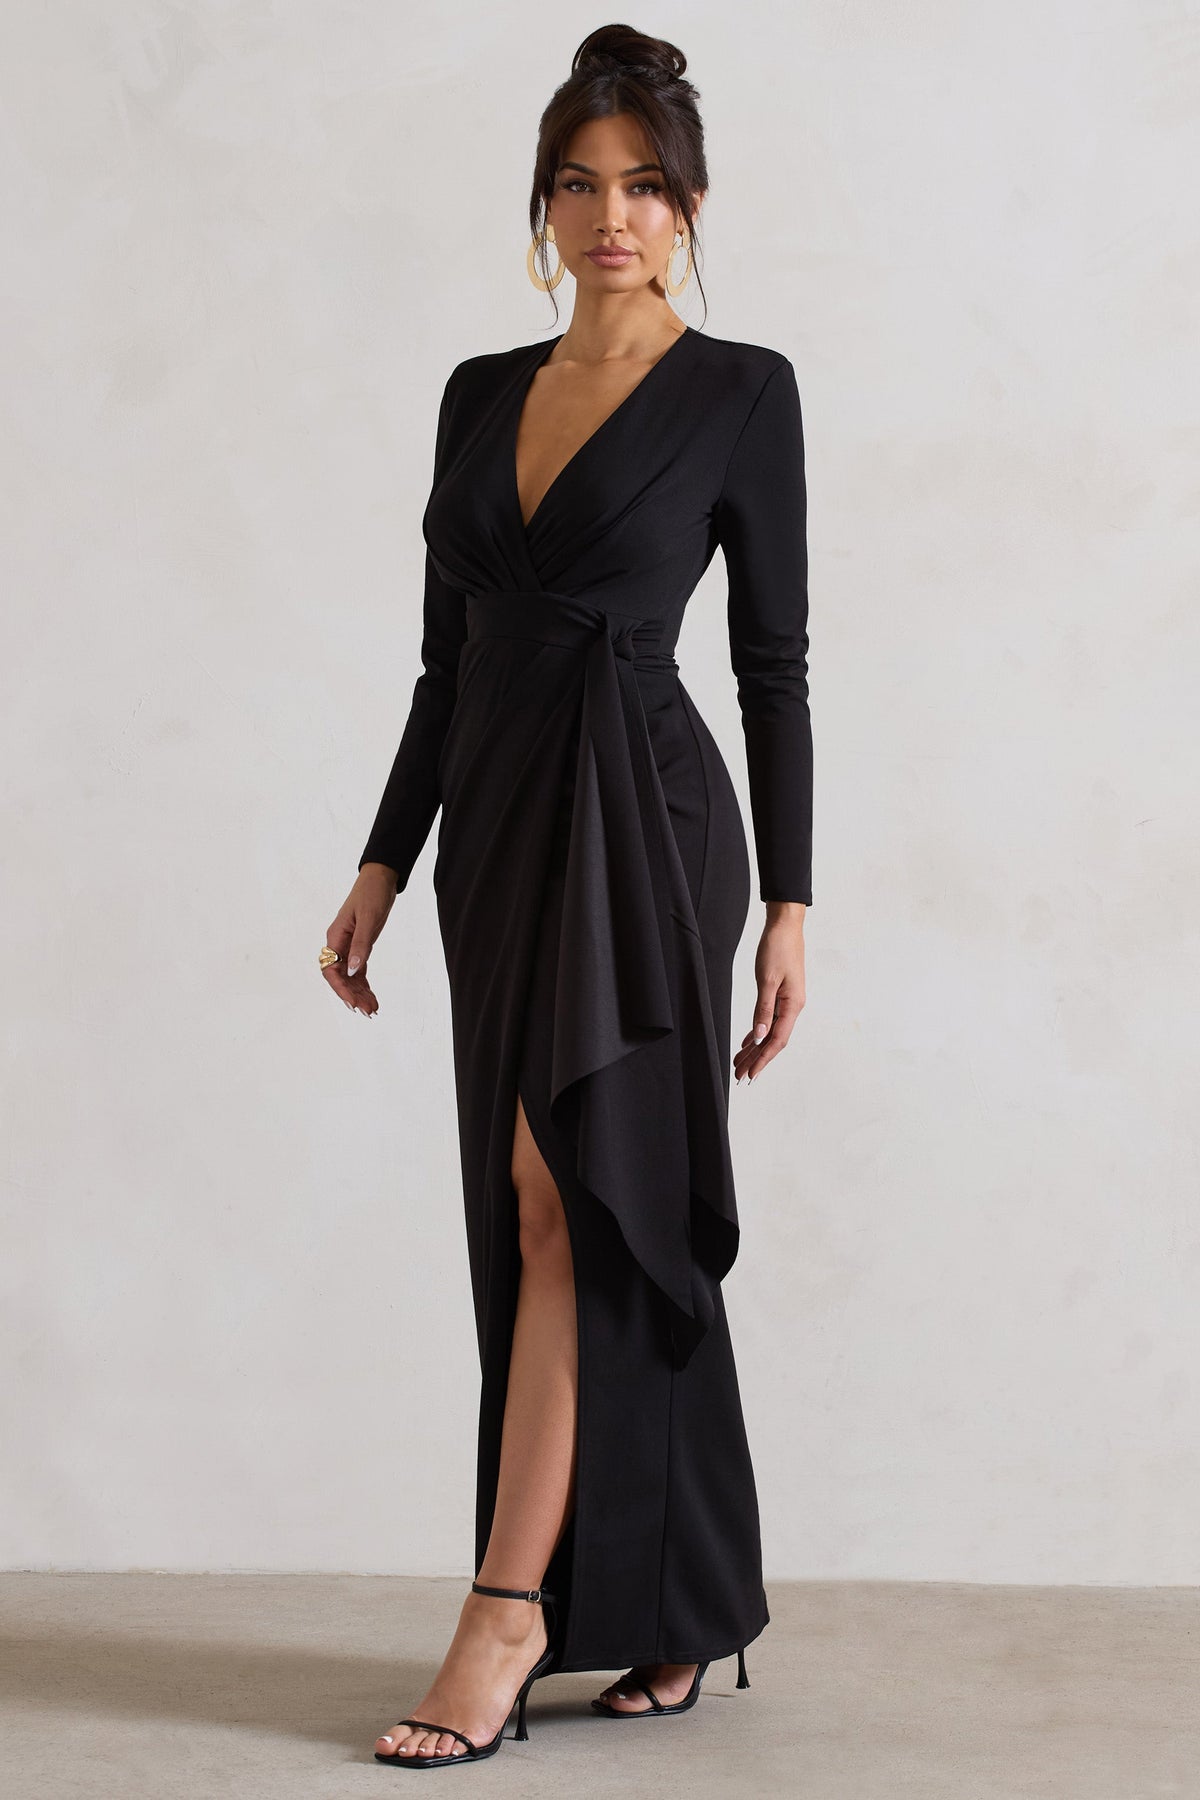 Tricotto Black Dress Style C-108